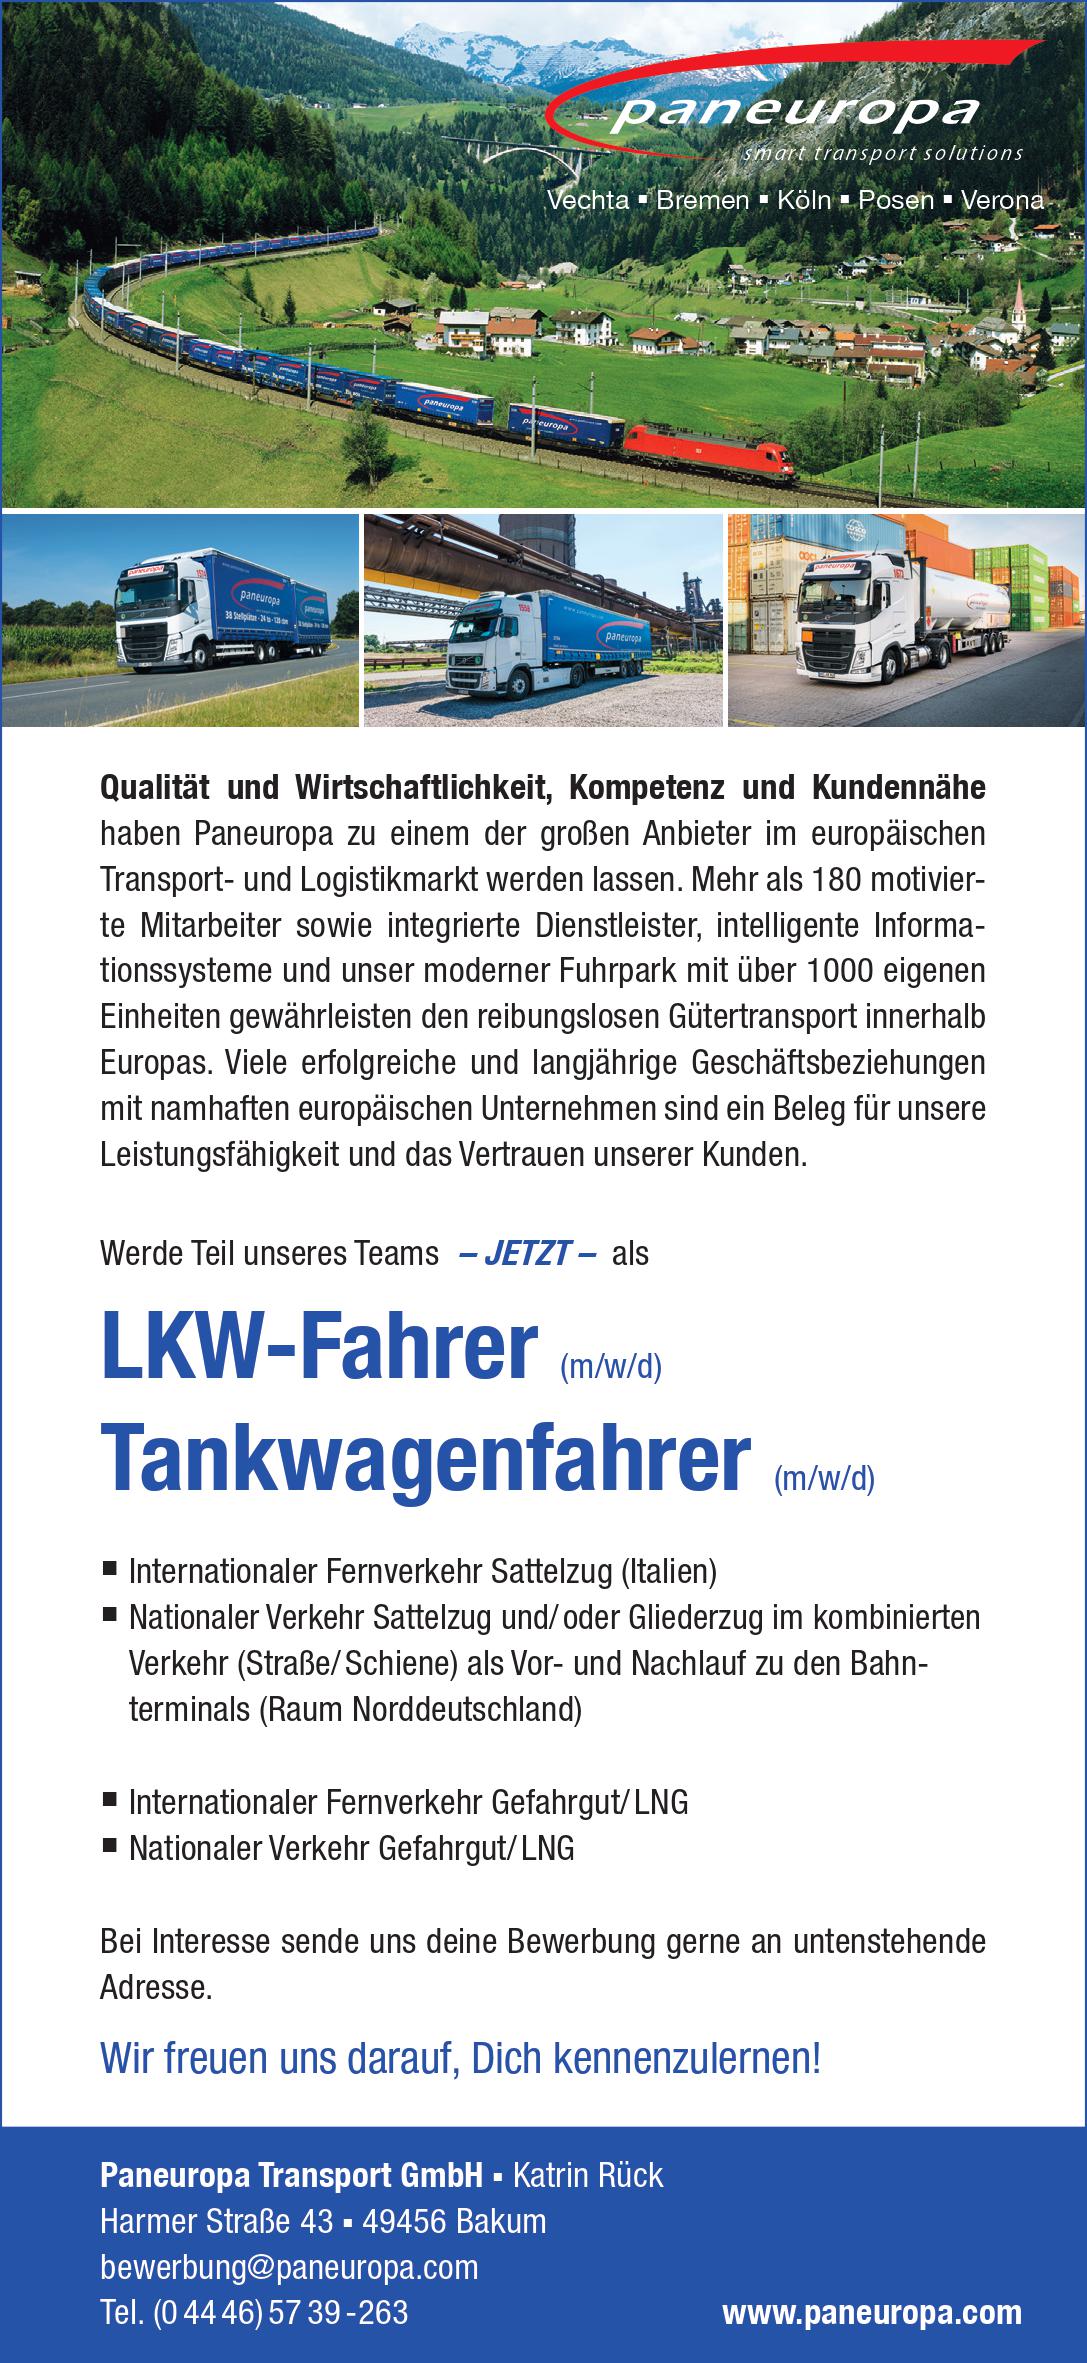 LKW-Fahrer (m/w/d) Tankwagenfahrer (m/w/d)